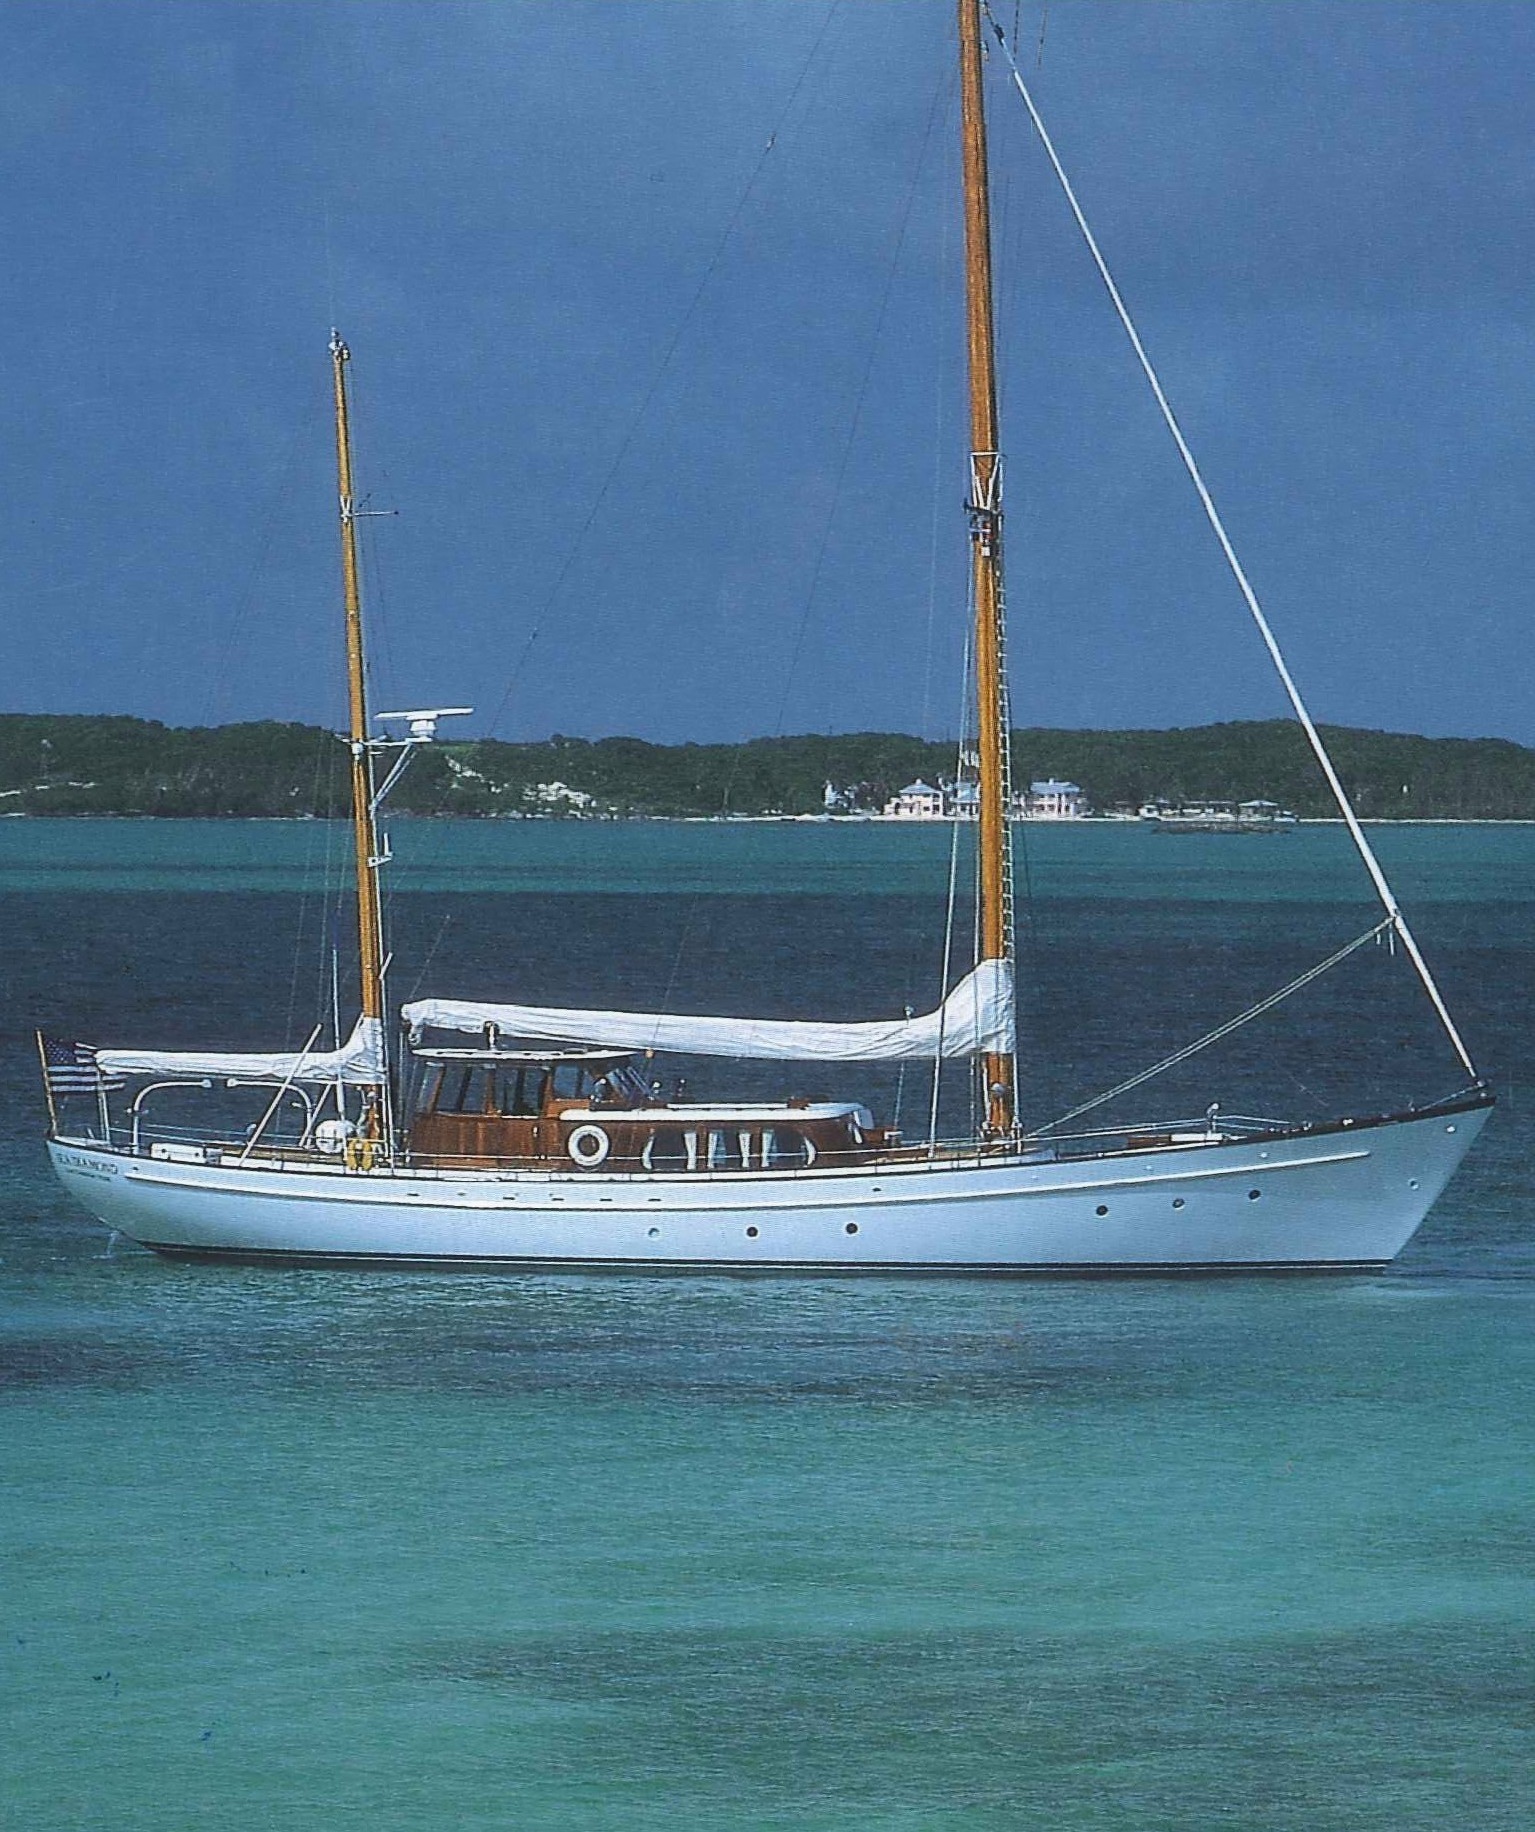 The 27m Yacht SEA DIAMOND